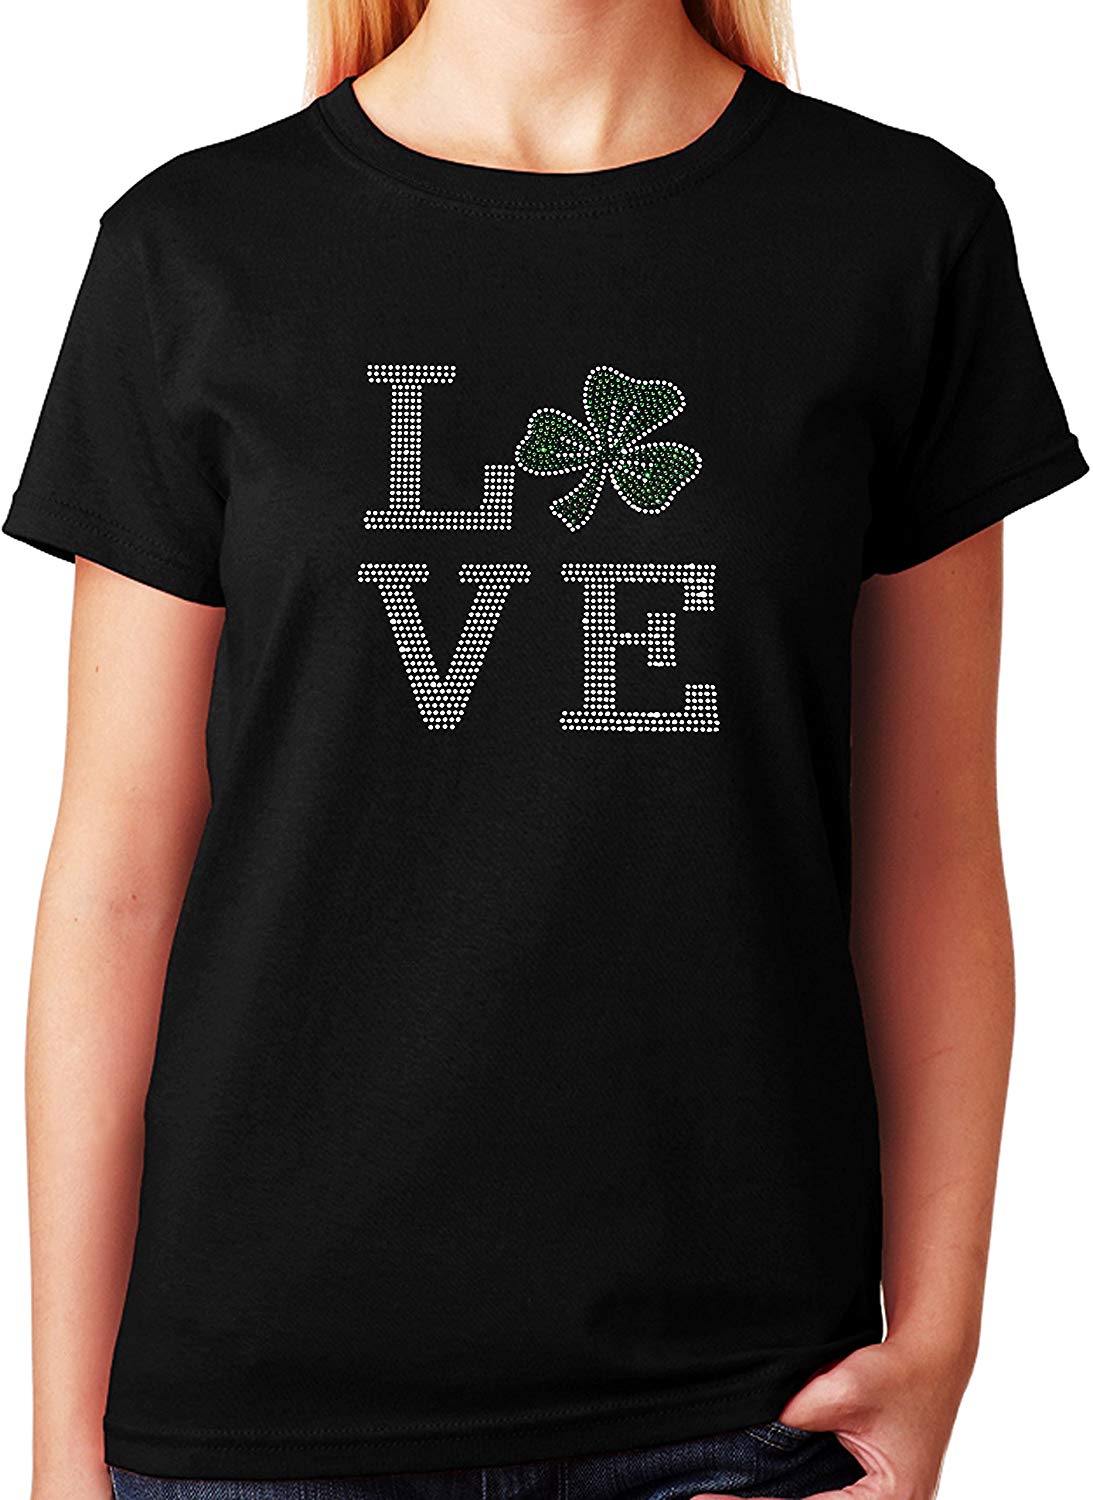 Women's / Unisex T-Shirt with Love ST. Patrick's Day In Rhinestones